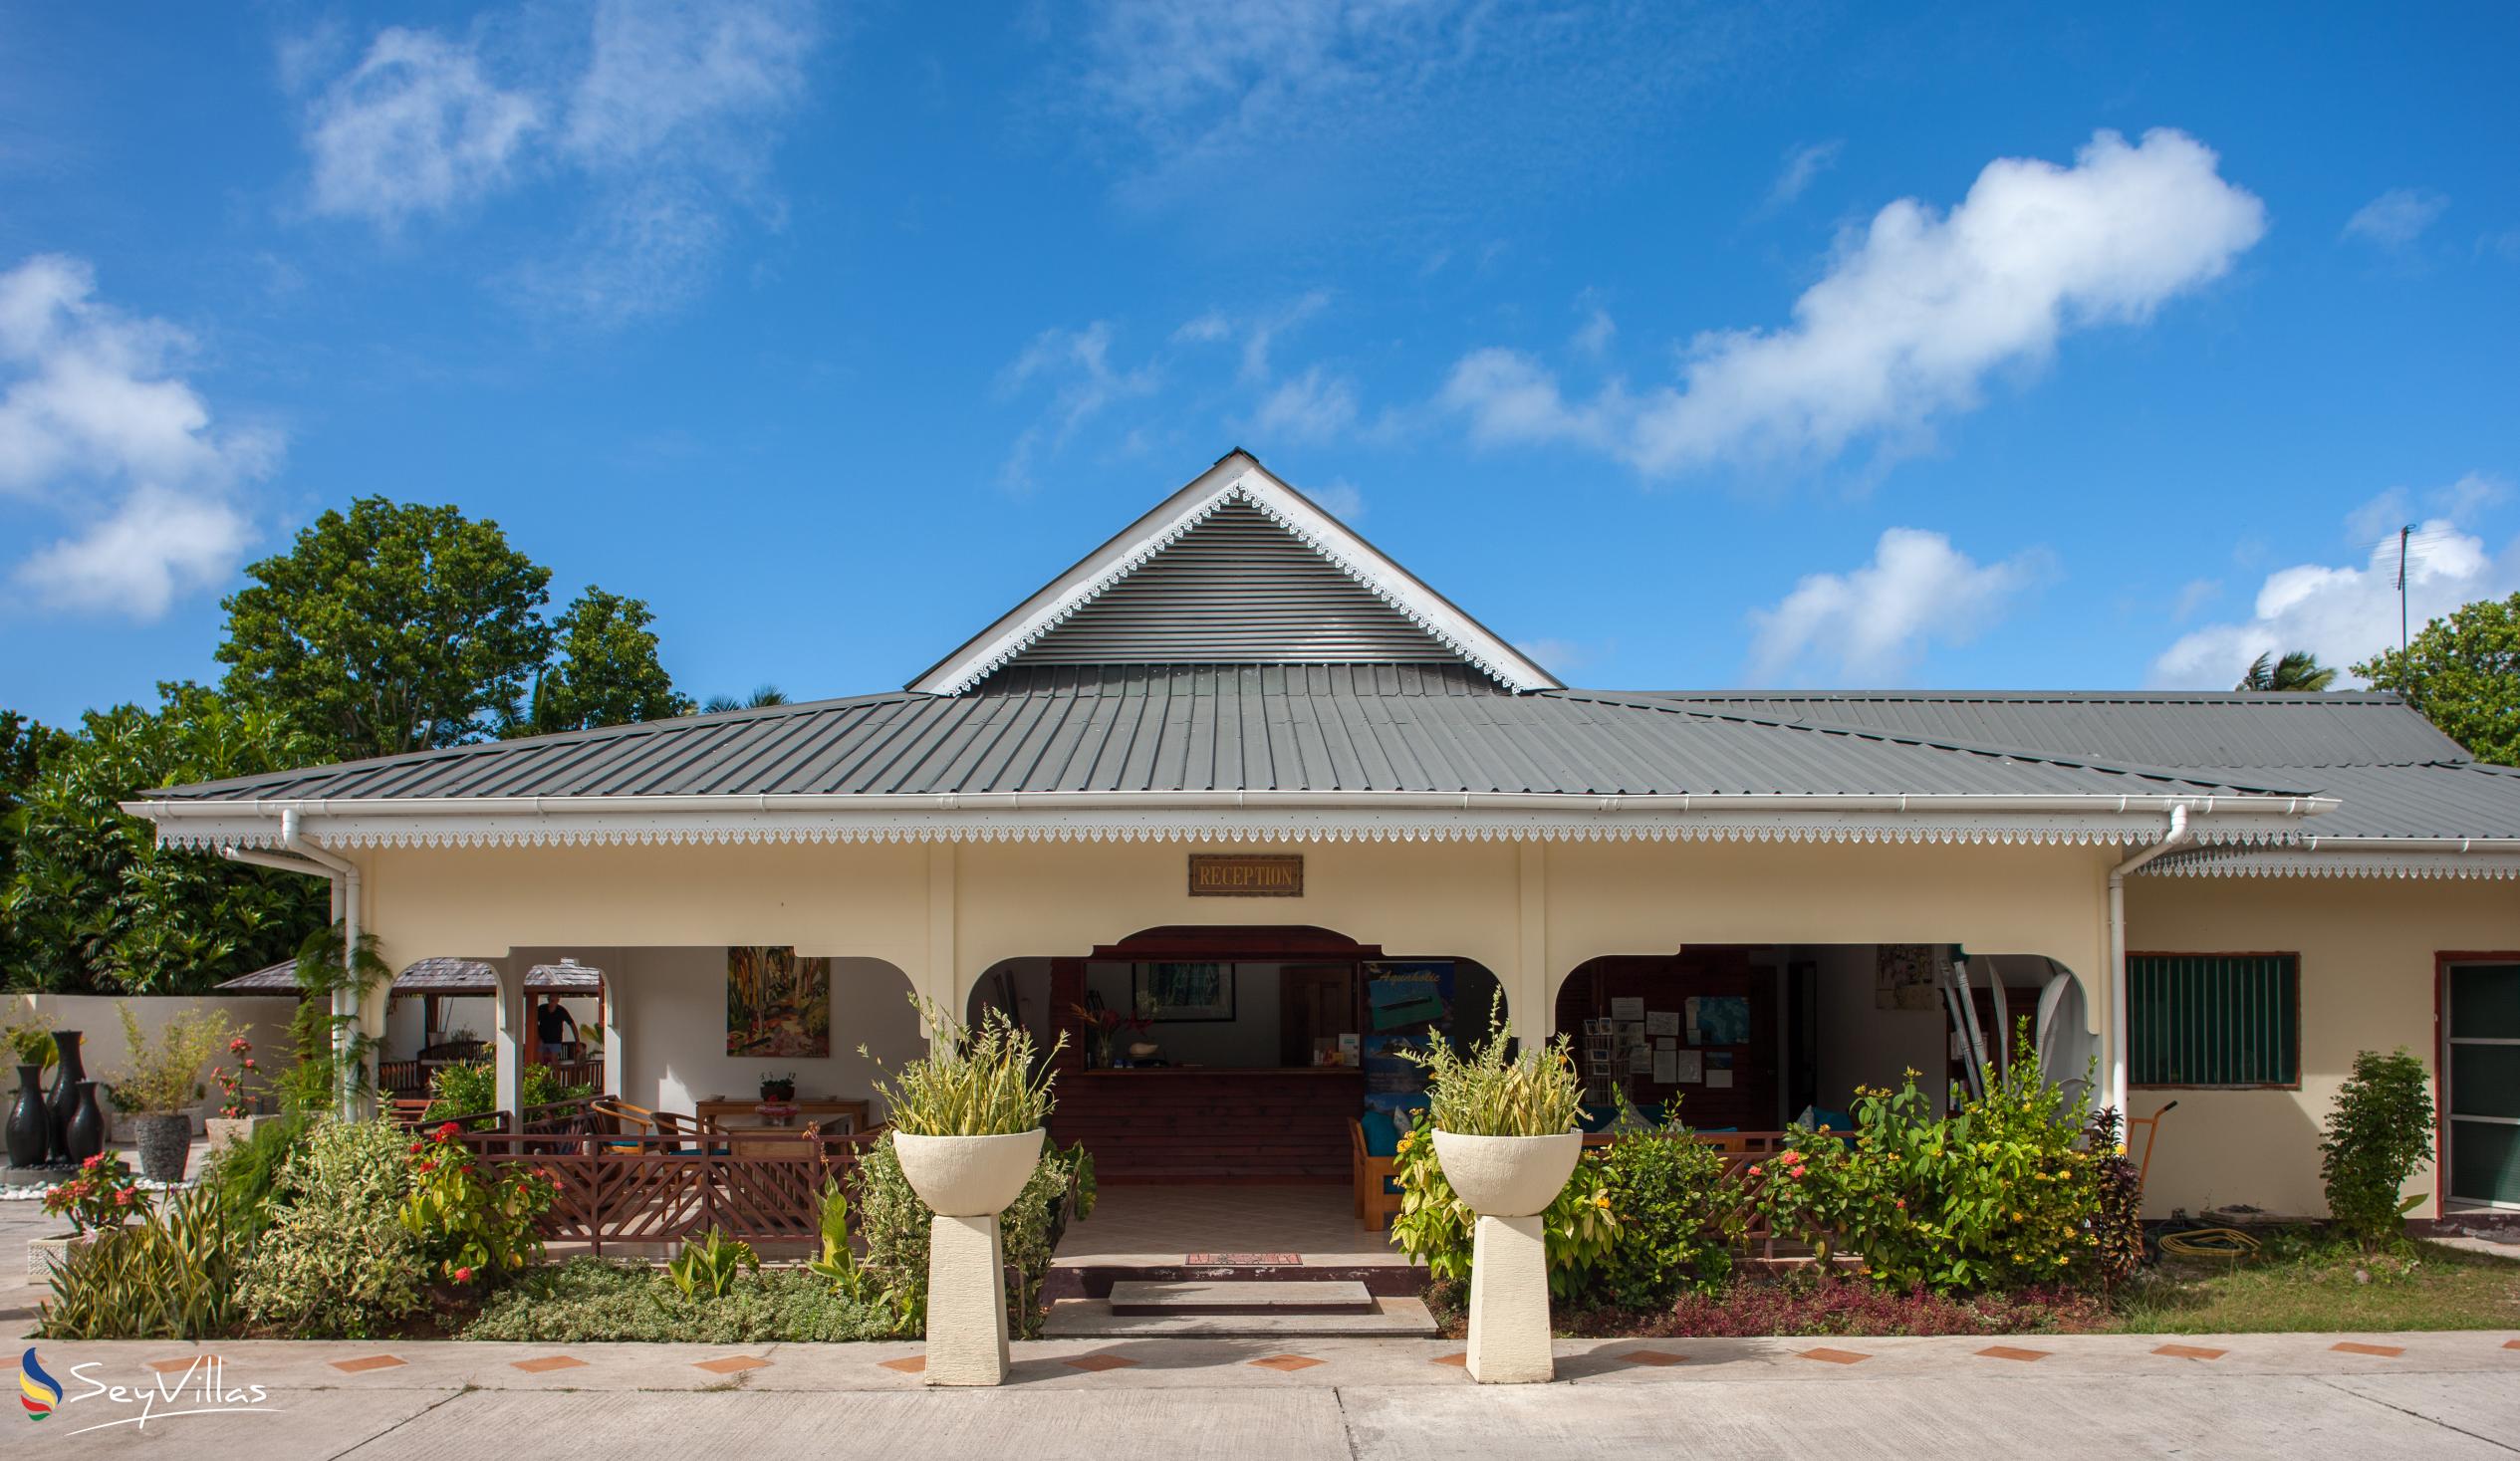 Foto 10: Villas de Mer - Aussenbereich - Praslin (Seychellen)